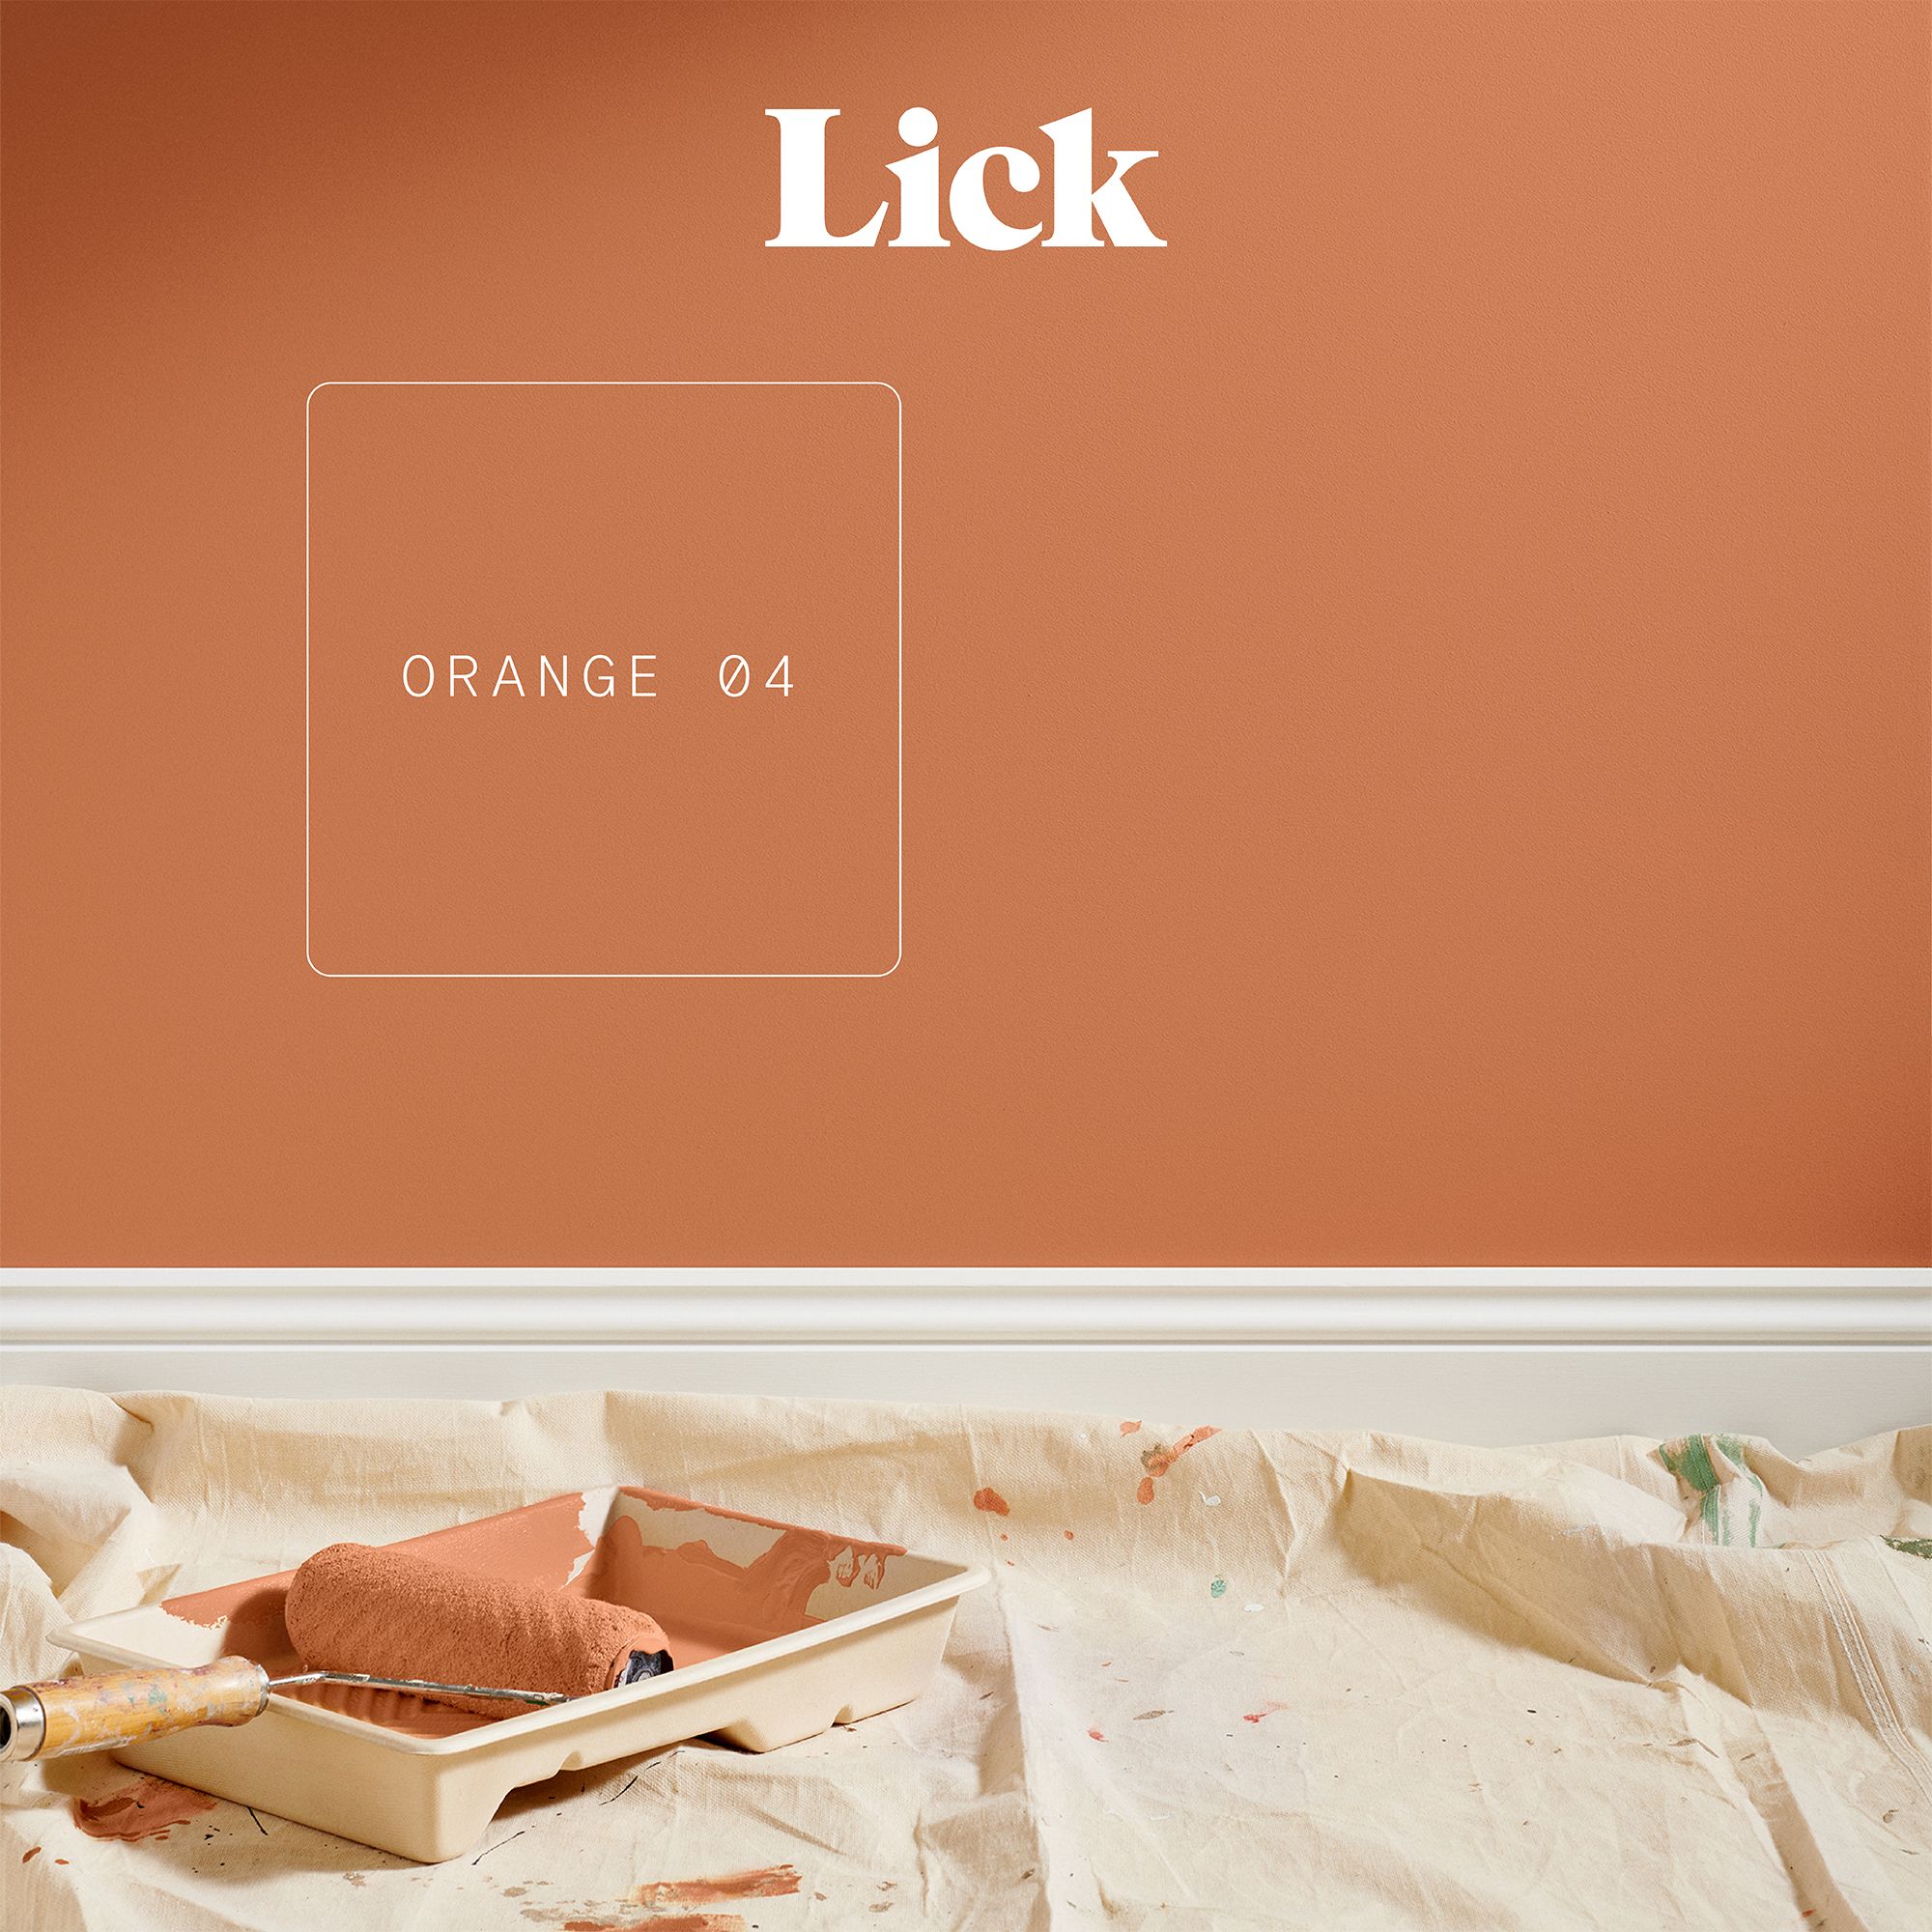 Lick Orange 04 Matt Emulsion paint, 2.5L